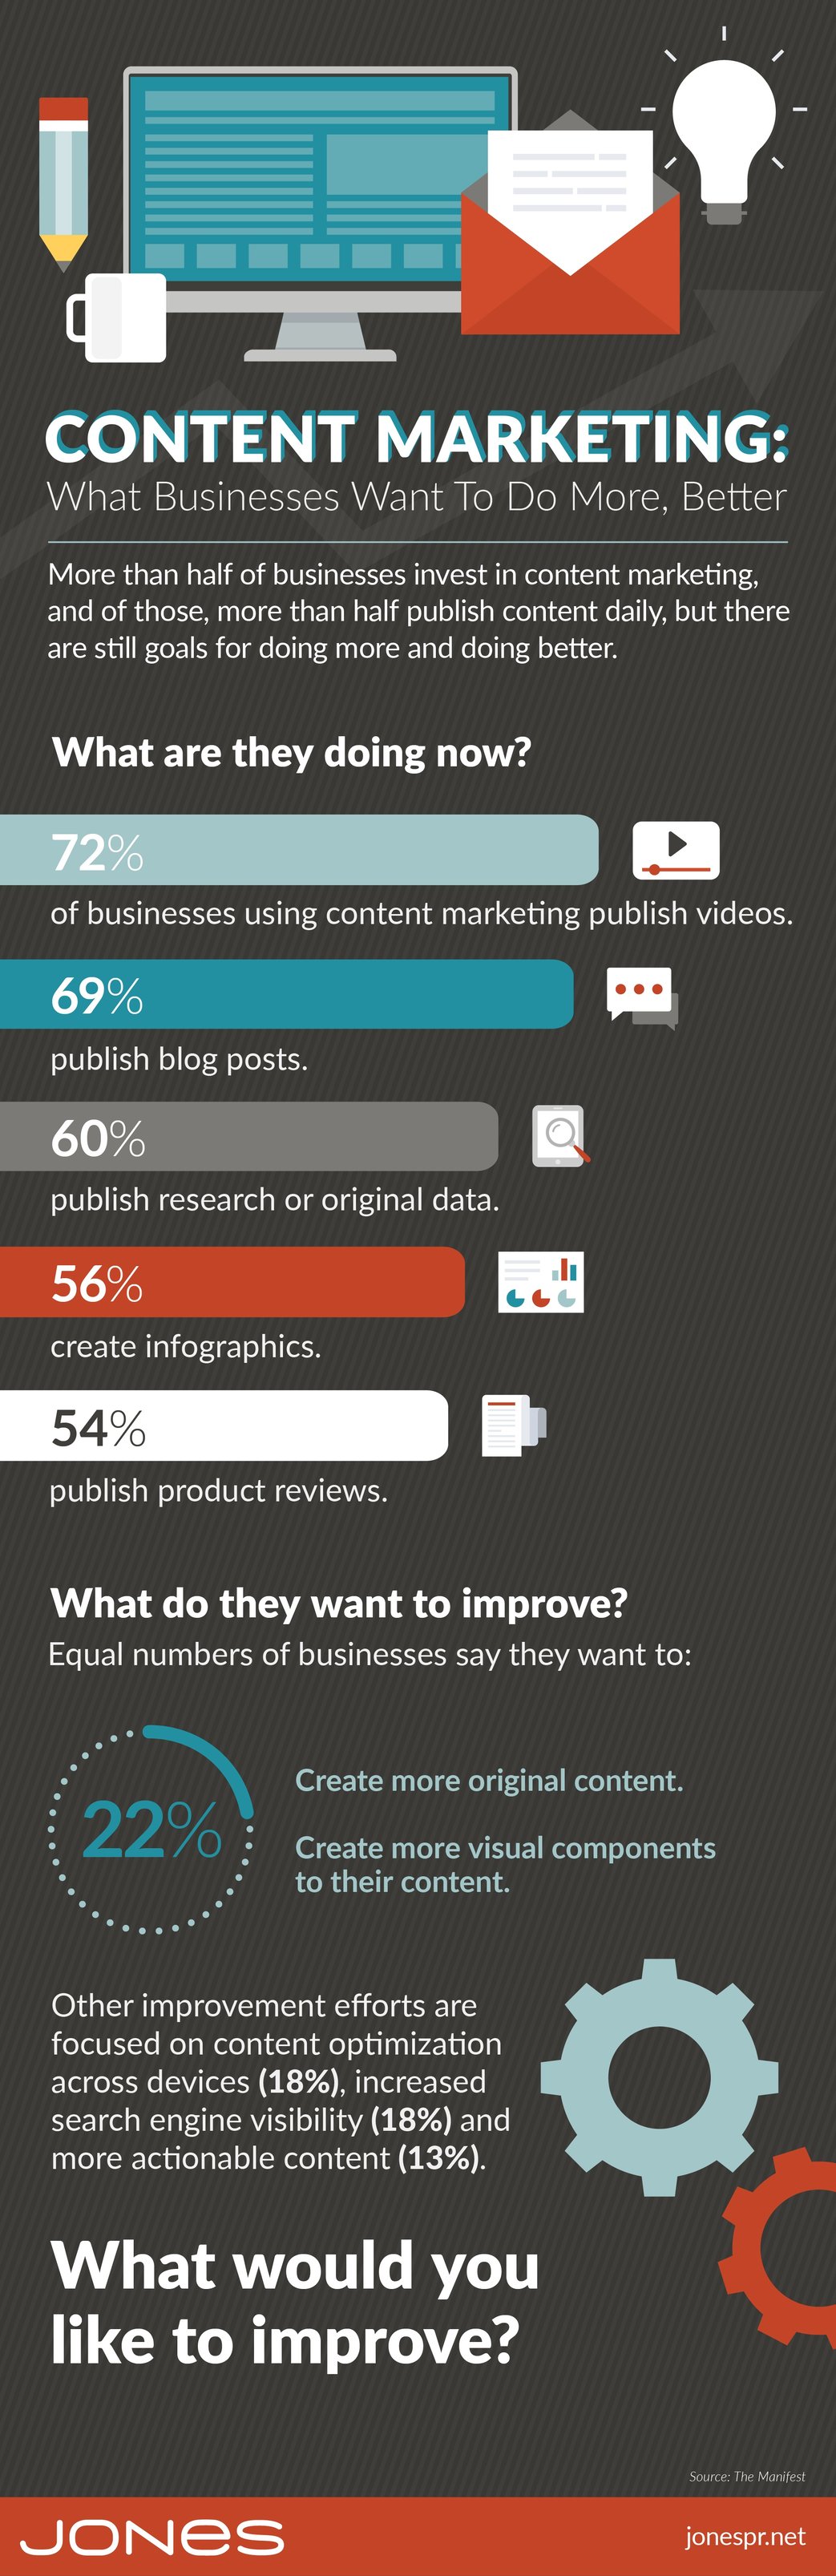 jones-infographic-content-marketing-improvement-01